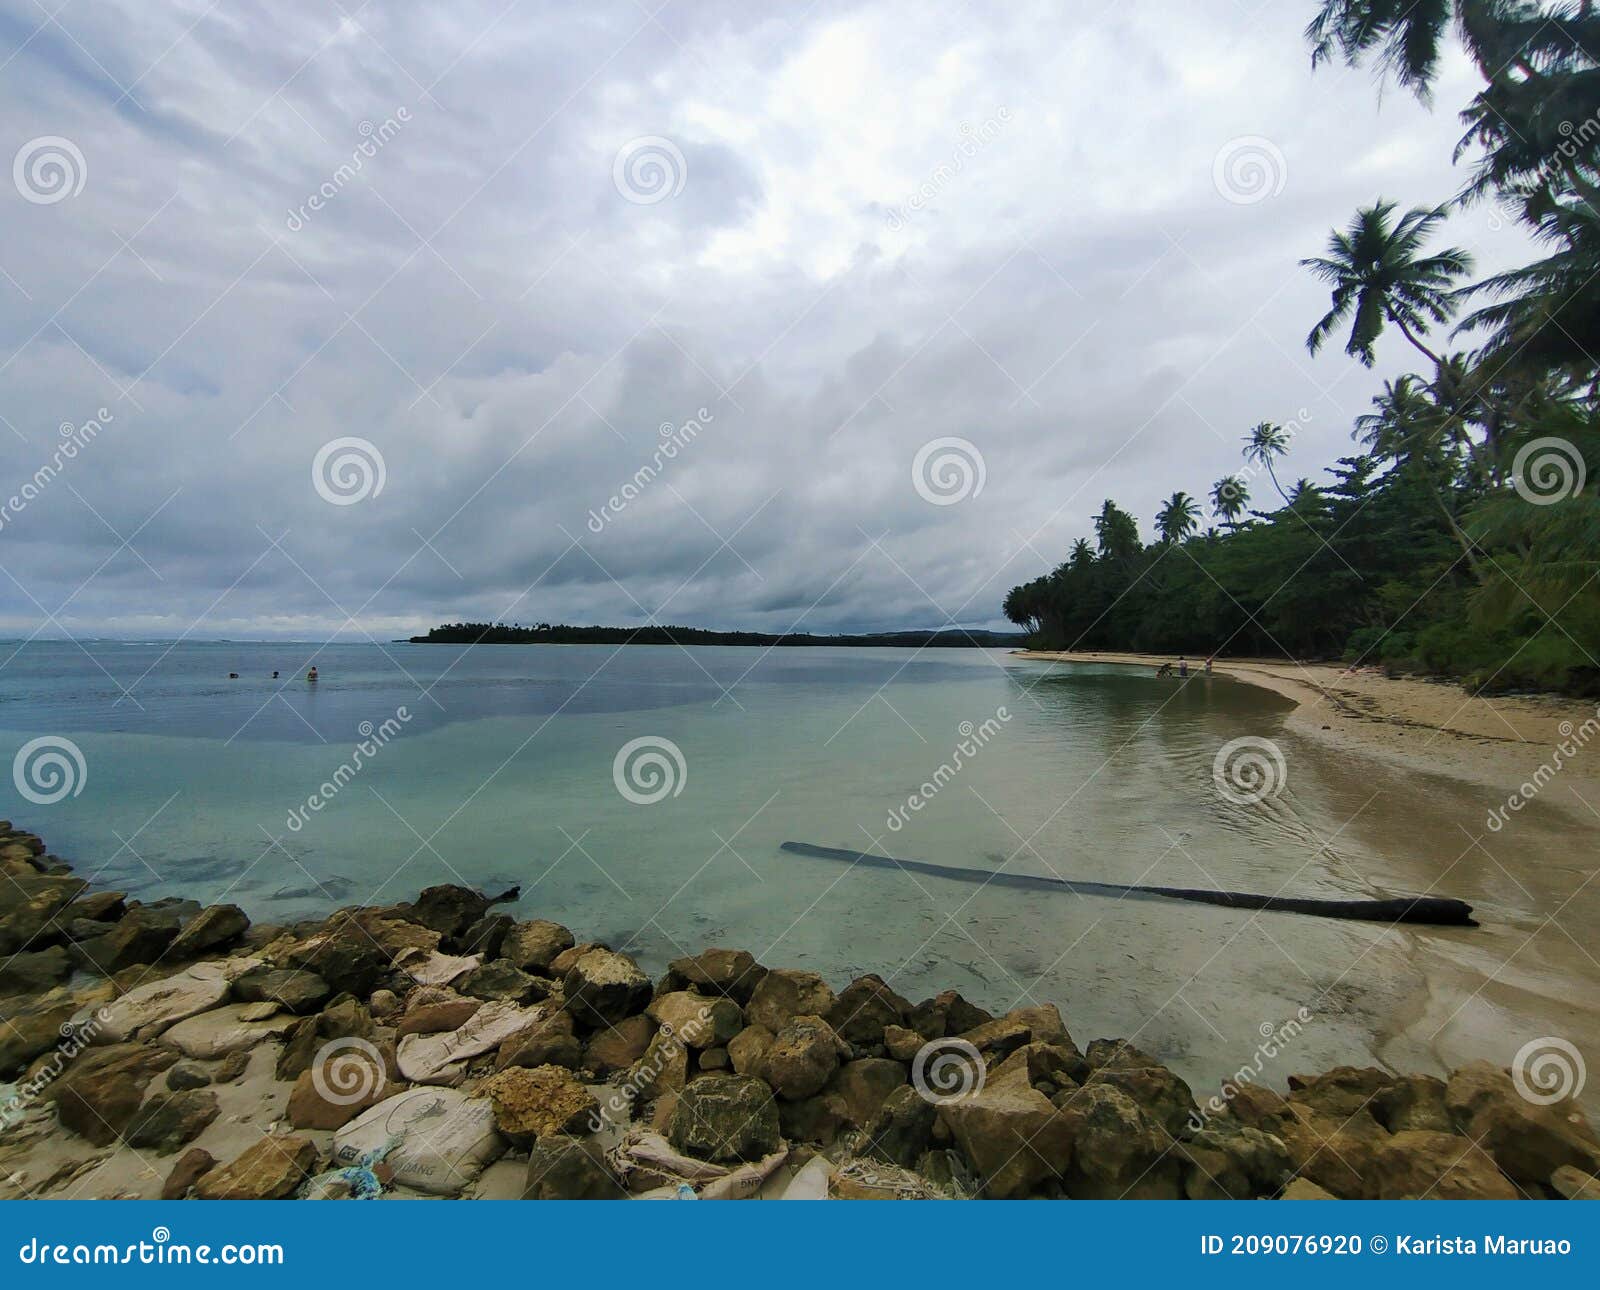 lagundri beach, teluk dalam, nias selatan, indonesia